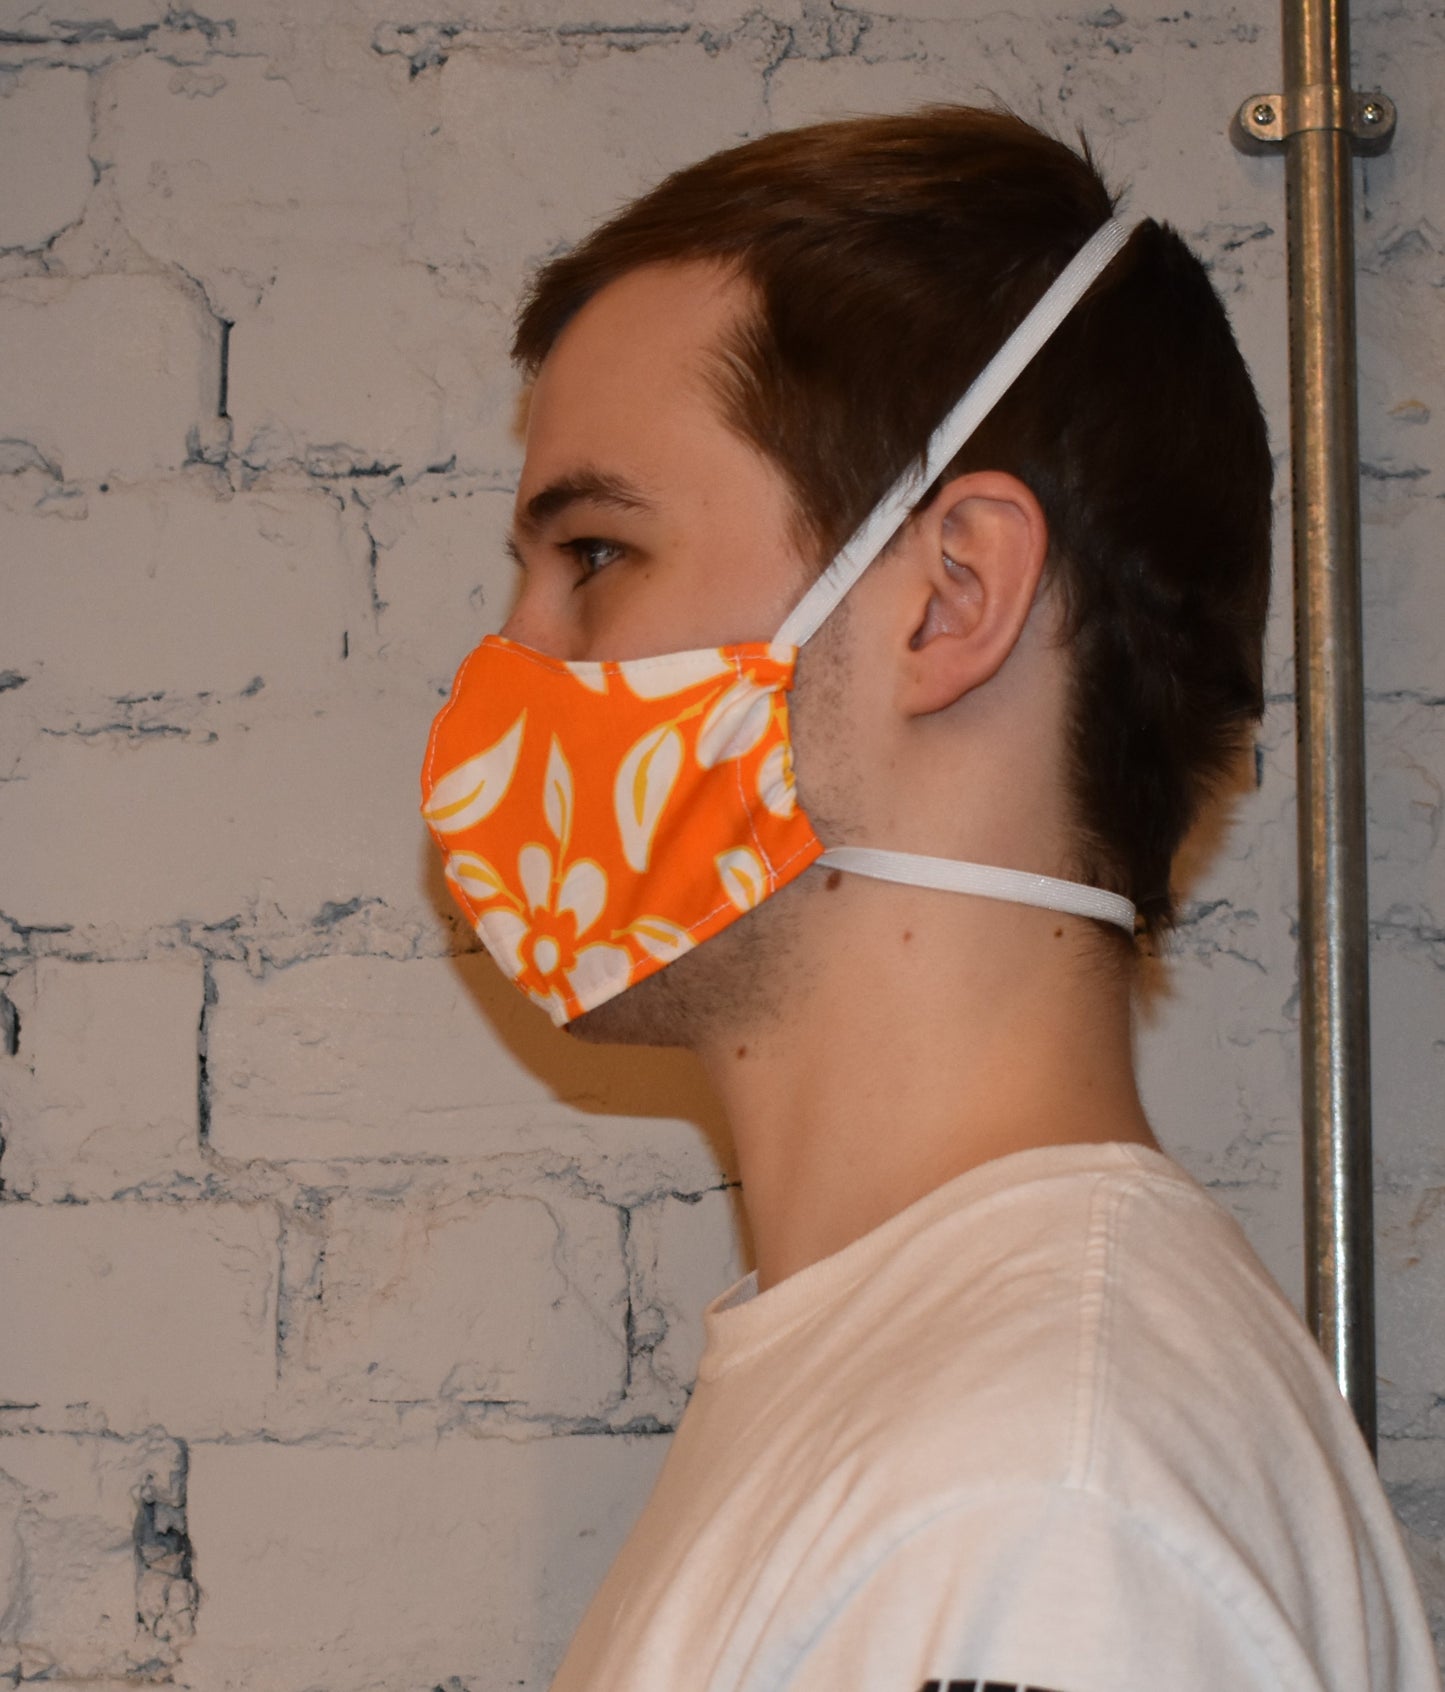 Single - Shaped Face Mask: Orange Floral - REDUCED